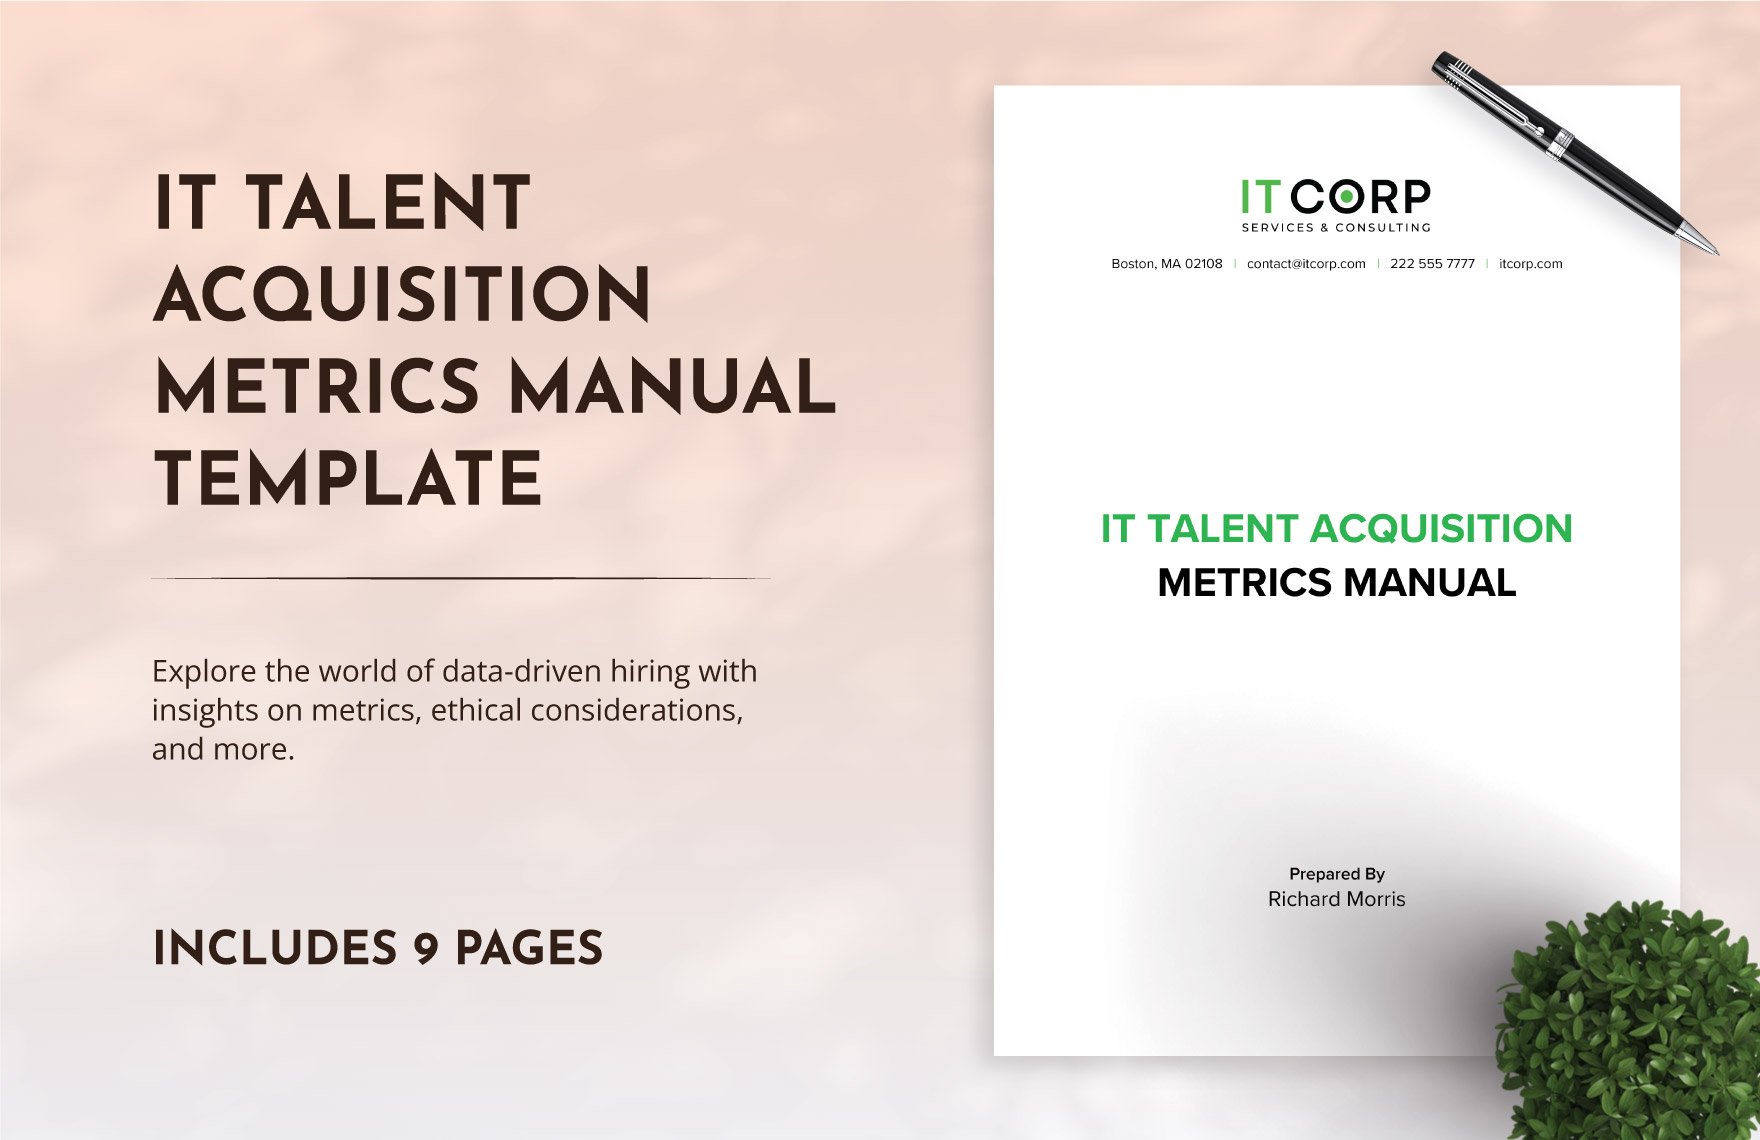 IT Talent Acquisition Metrics Manual Template in Word, Google Docs, PDF